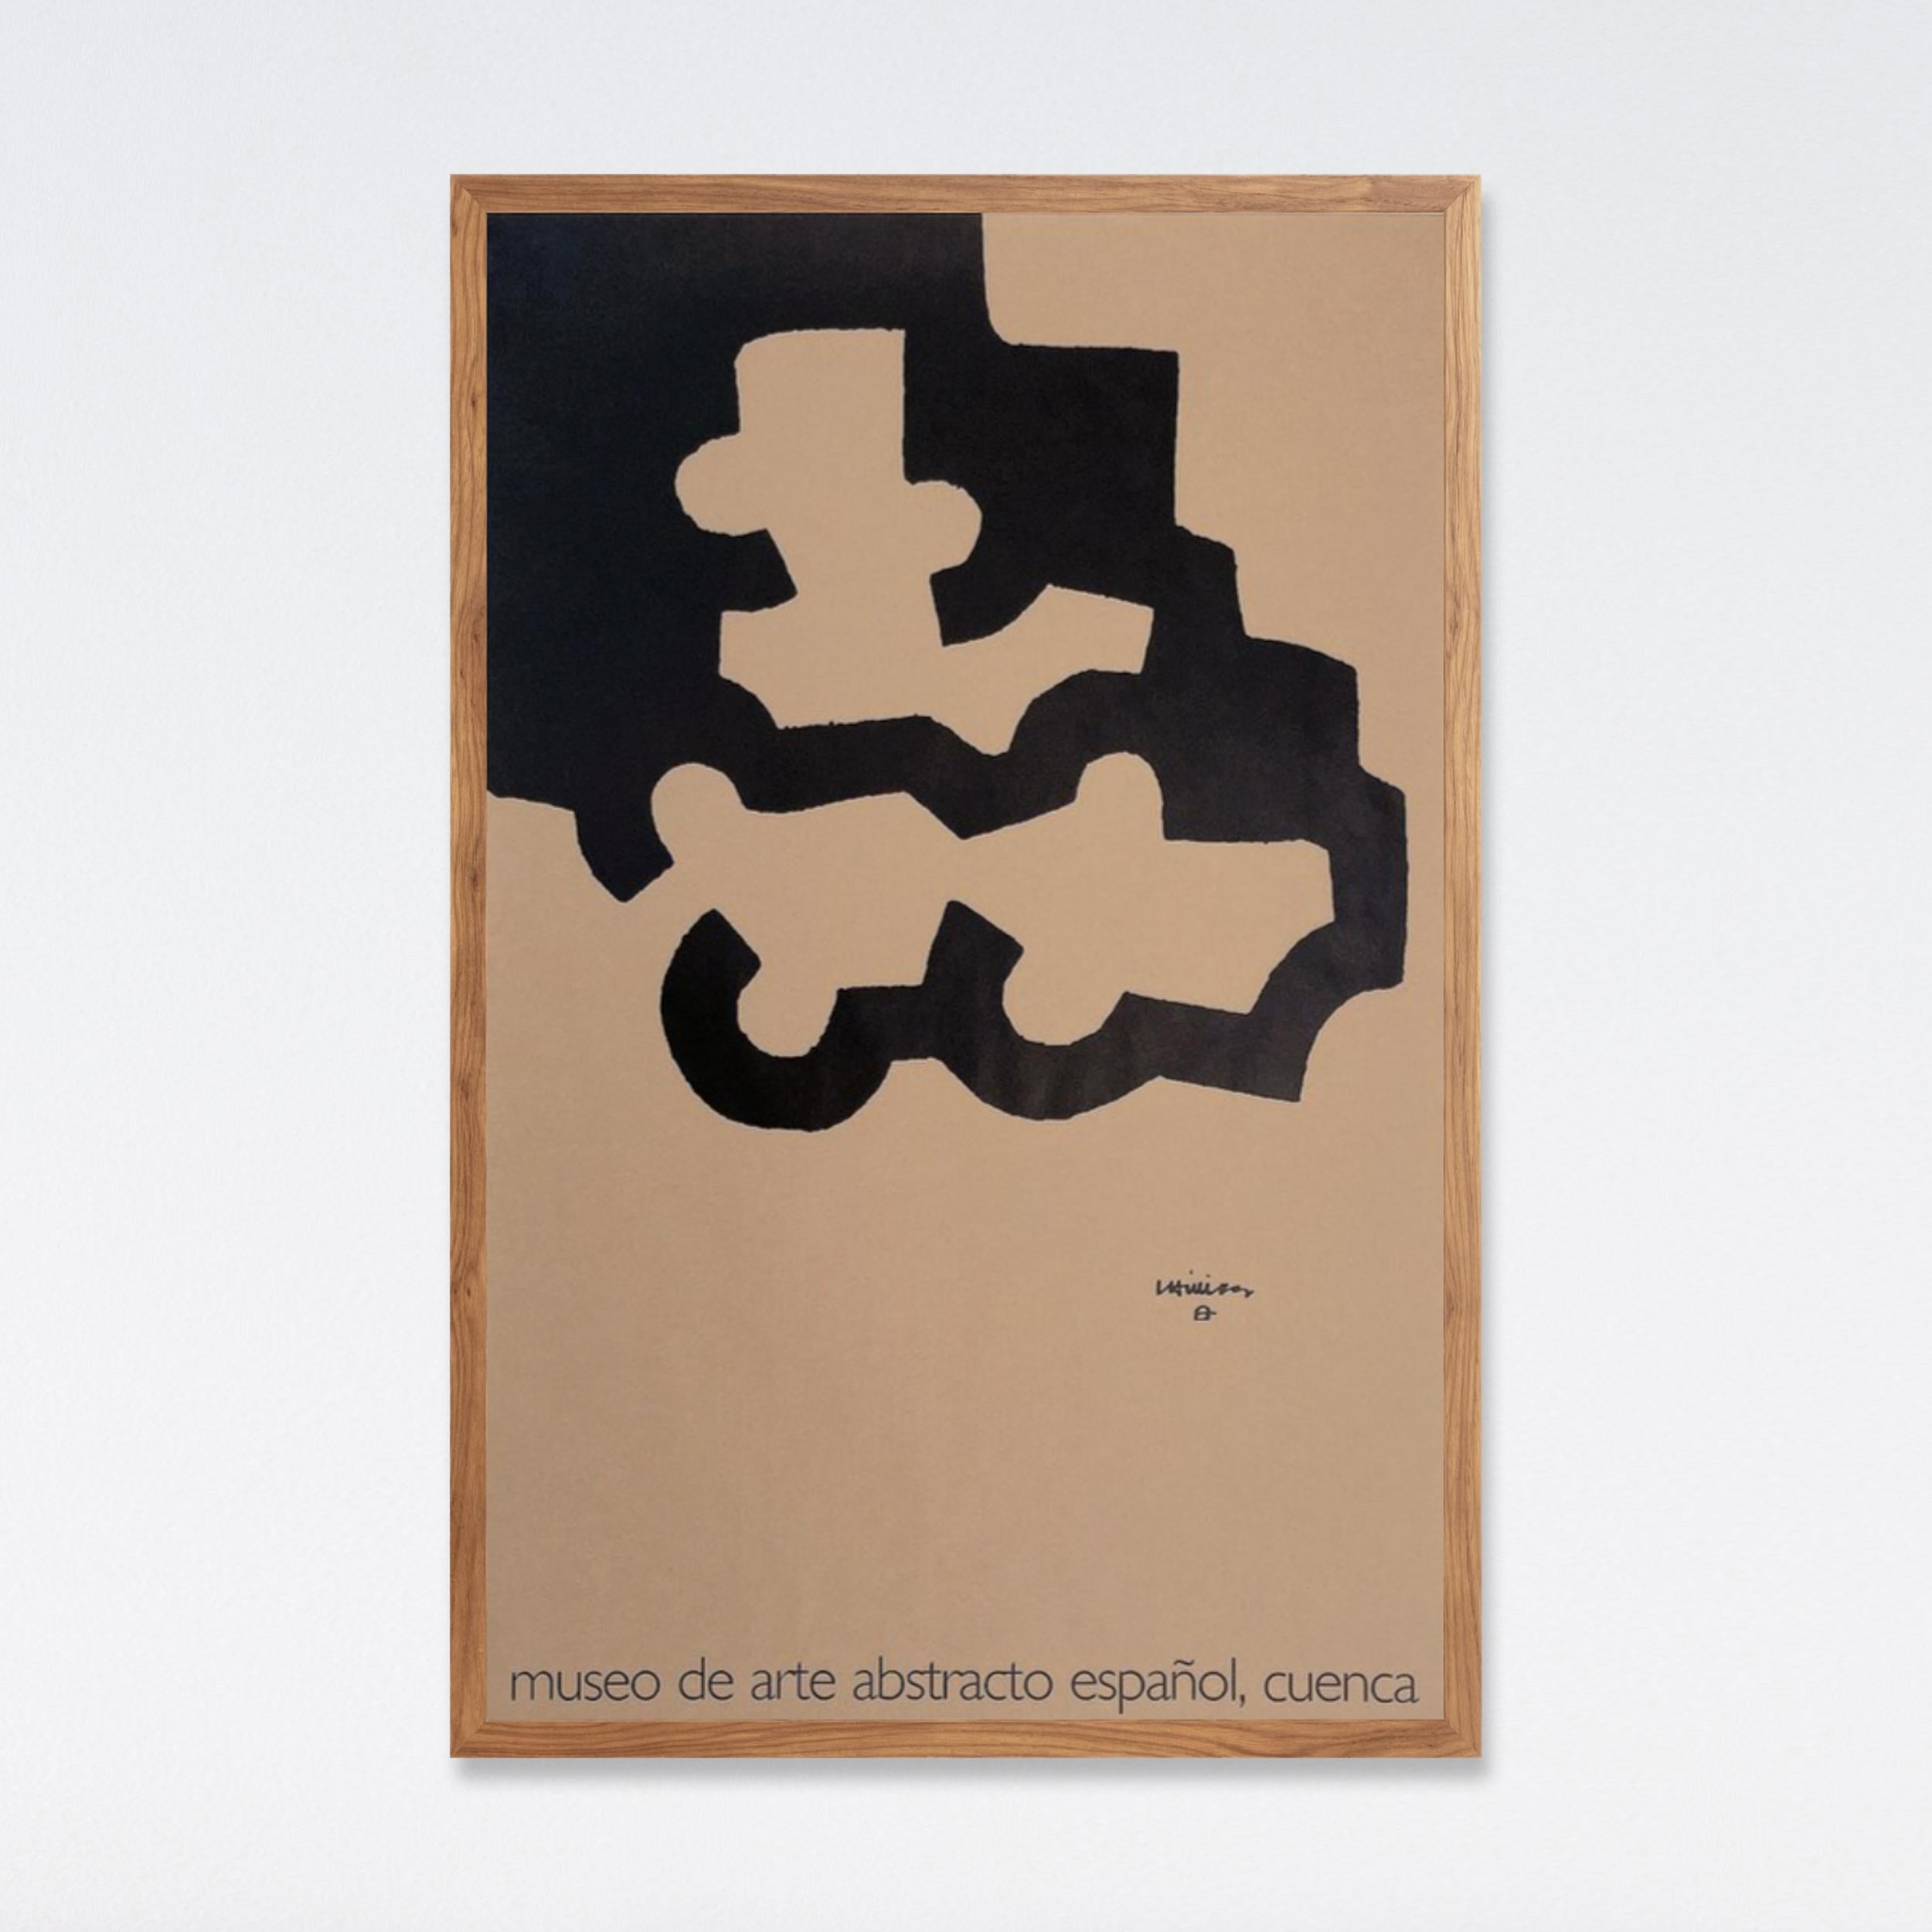 Eduardo Chillida, Sin titulo (Untitled), 1994 Lithographic poster, geometric 3